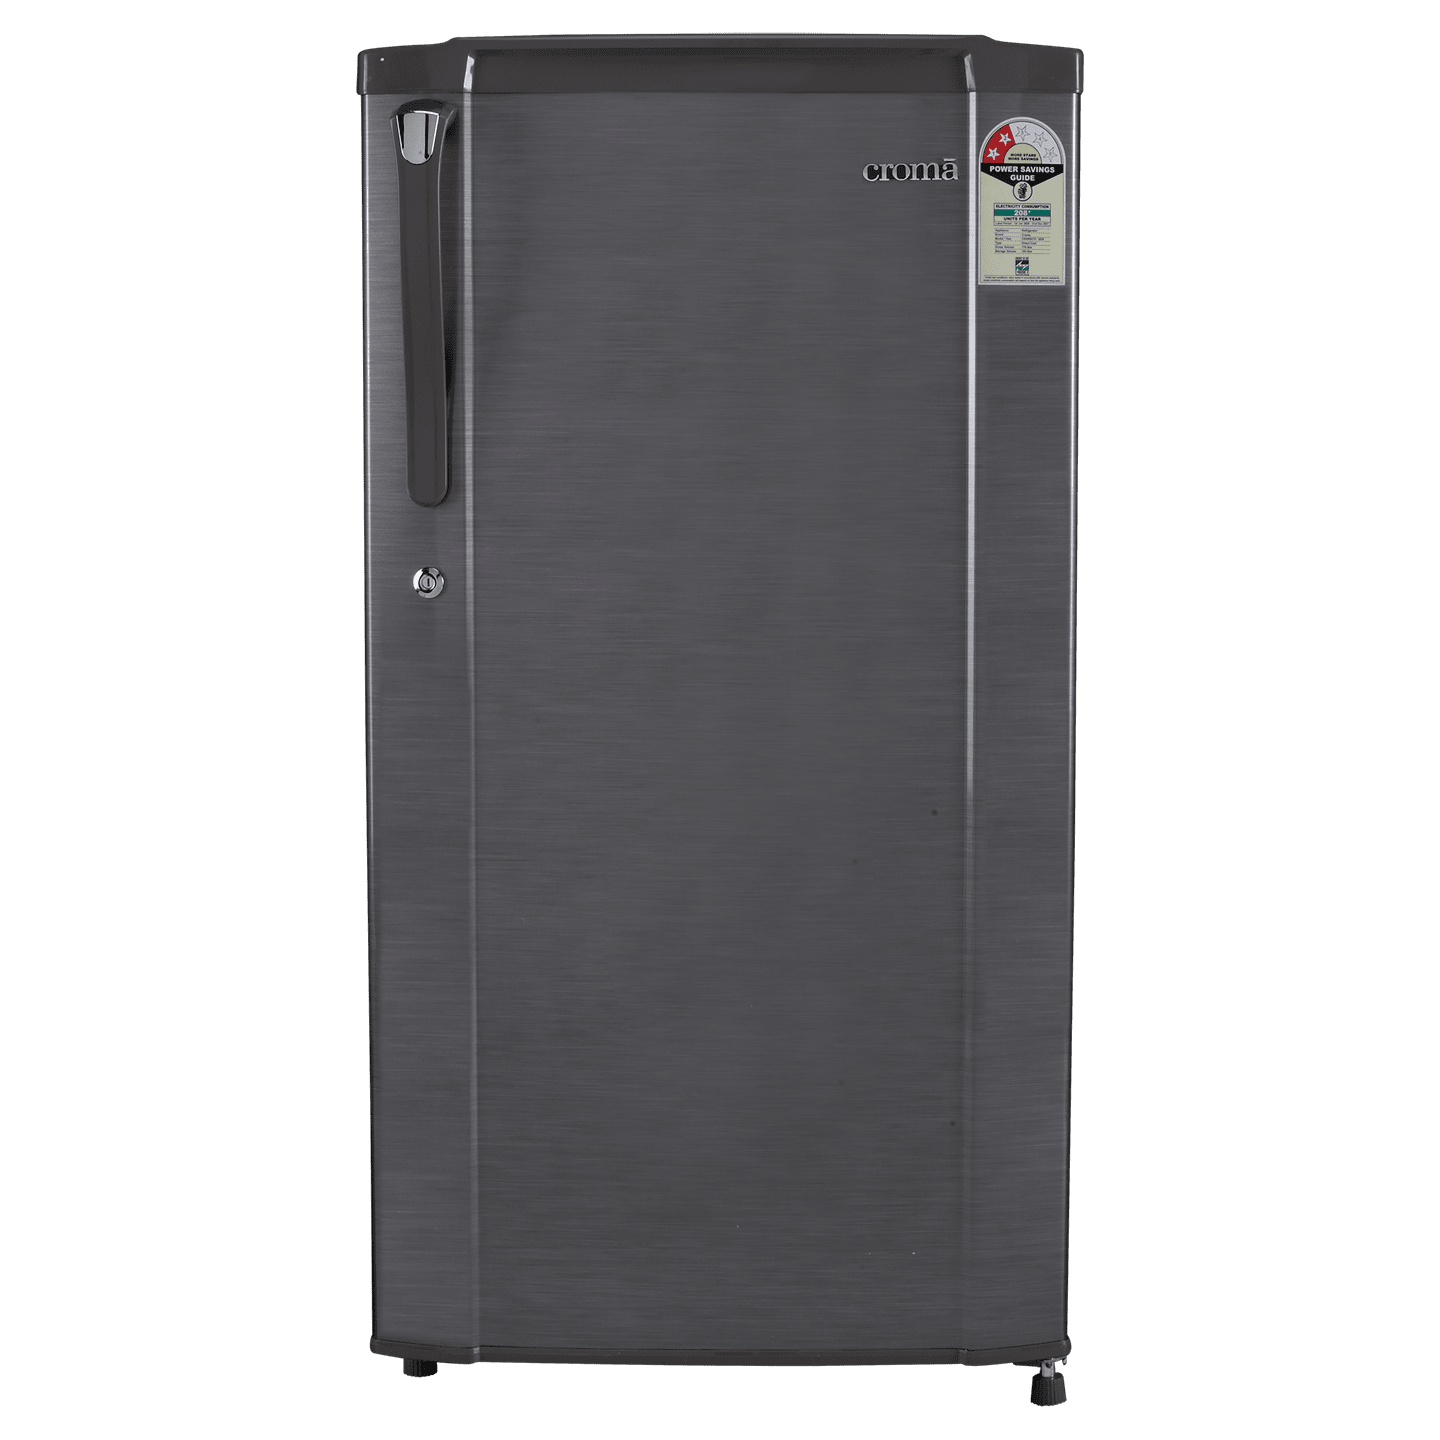 Croma 170 Litres 2 Star Direct Cool Single Door Refrigerator (CRAR0215, Brushline Silver)